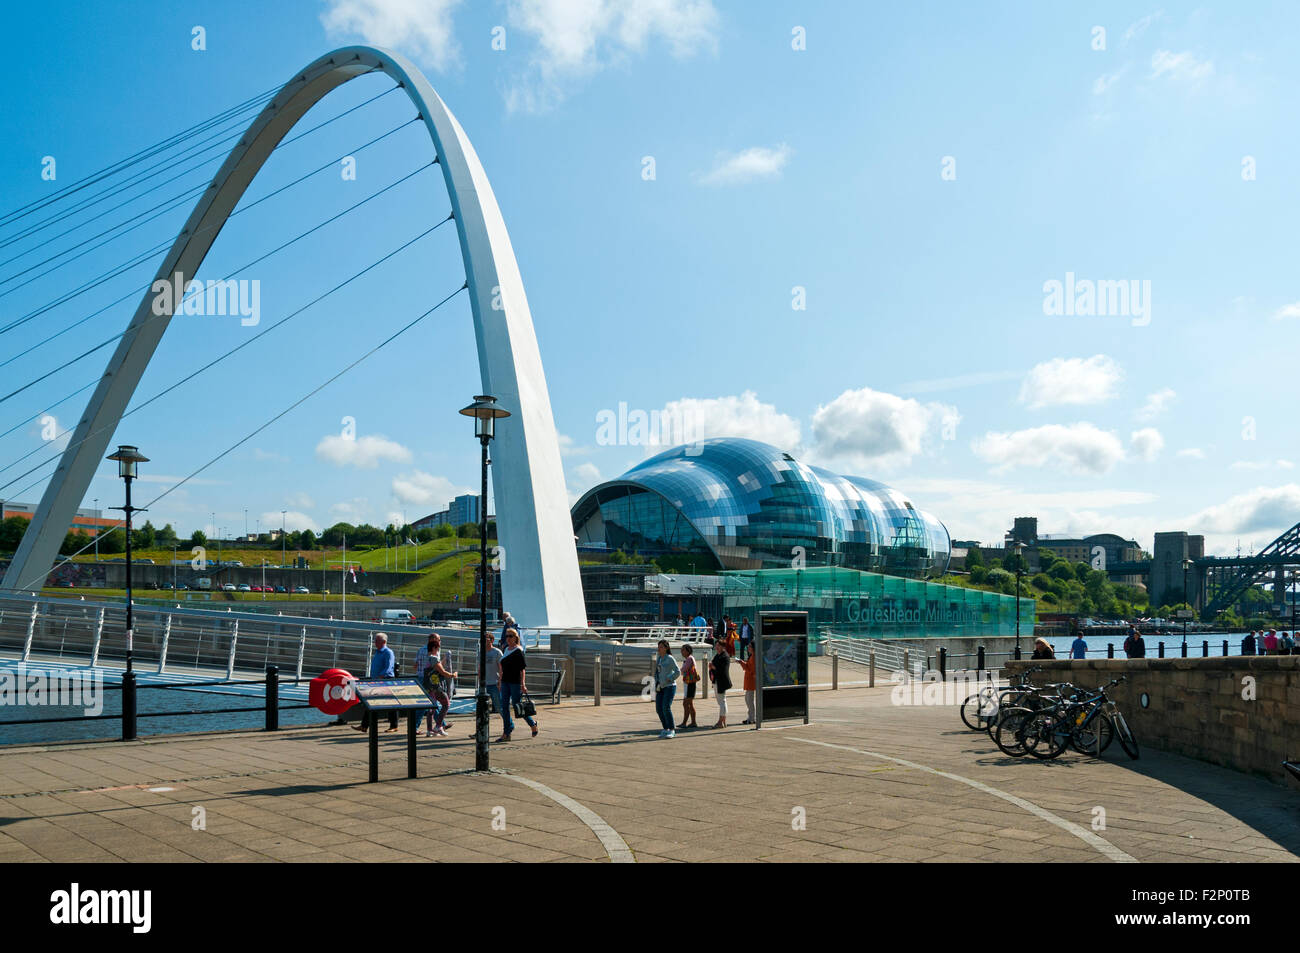 The Sage Centre and Gateshead Millennium Bridge, over the river Tyne, Newcastle-Gateshead, Tyne and Wear, England, UK. Stock Photo